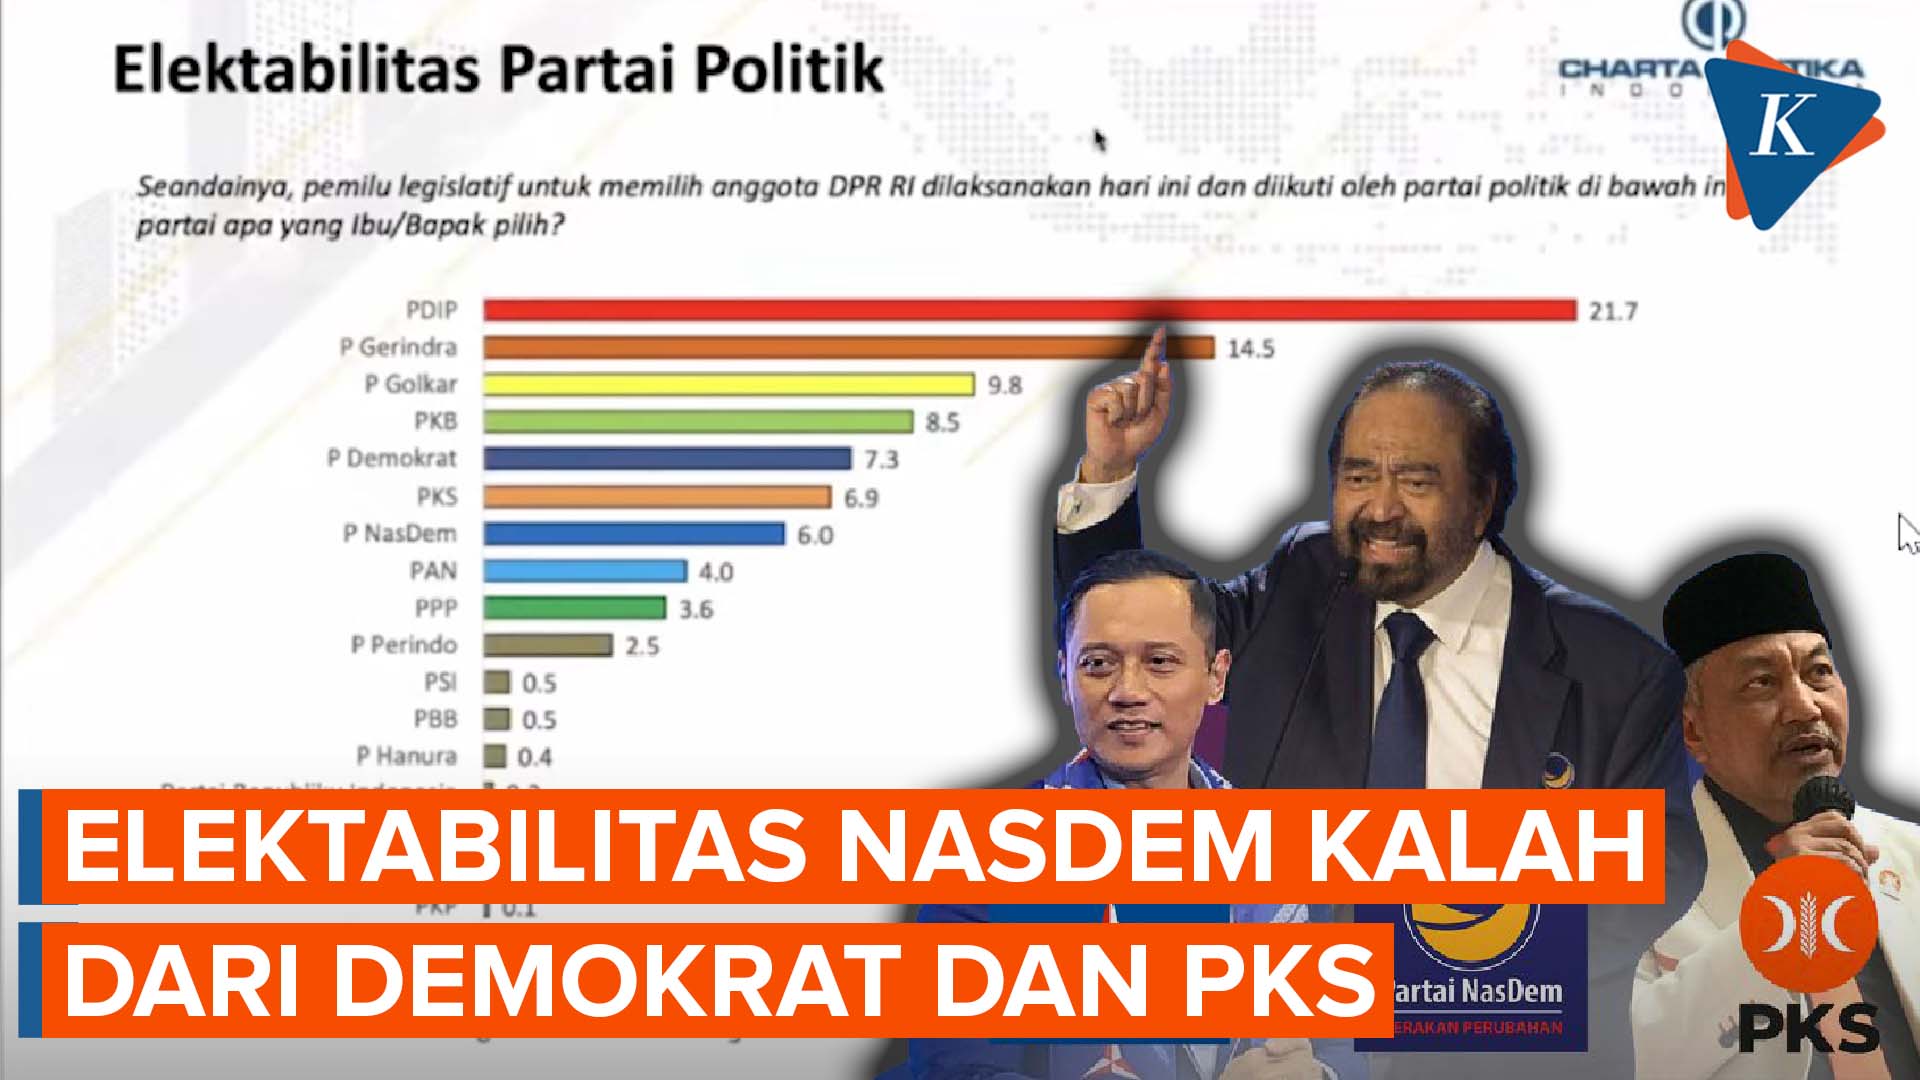 Survei Charta Politika: Elektabilitas Nasdem Tak Lebih Tinggi dari Demokrat dan PKS